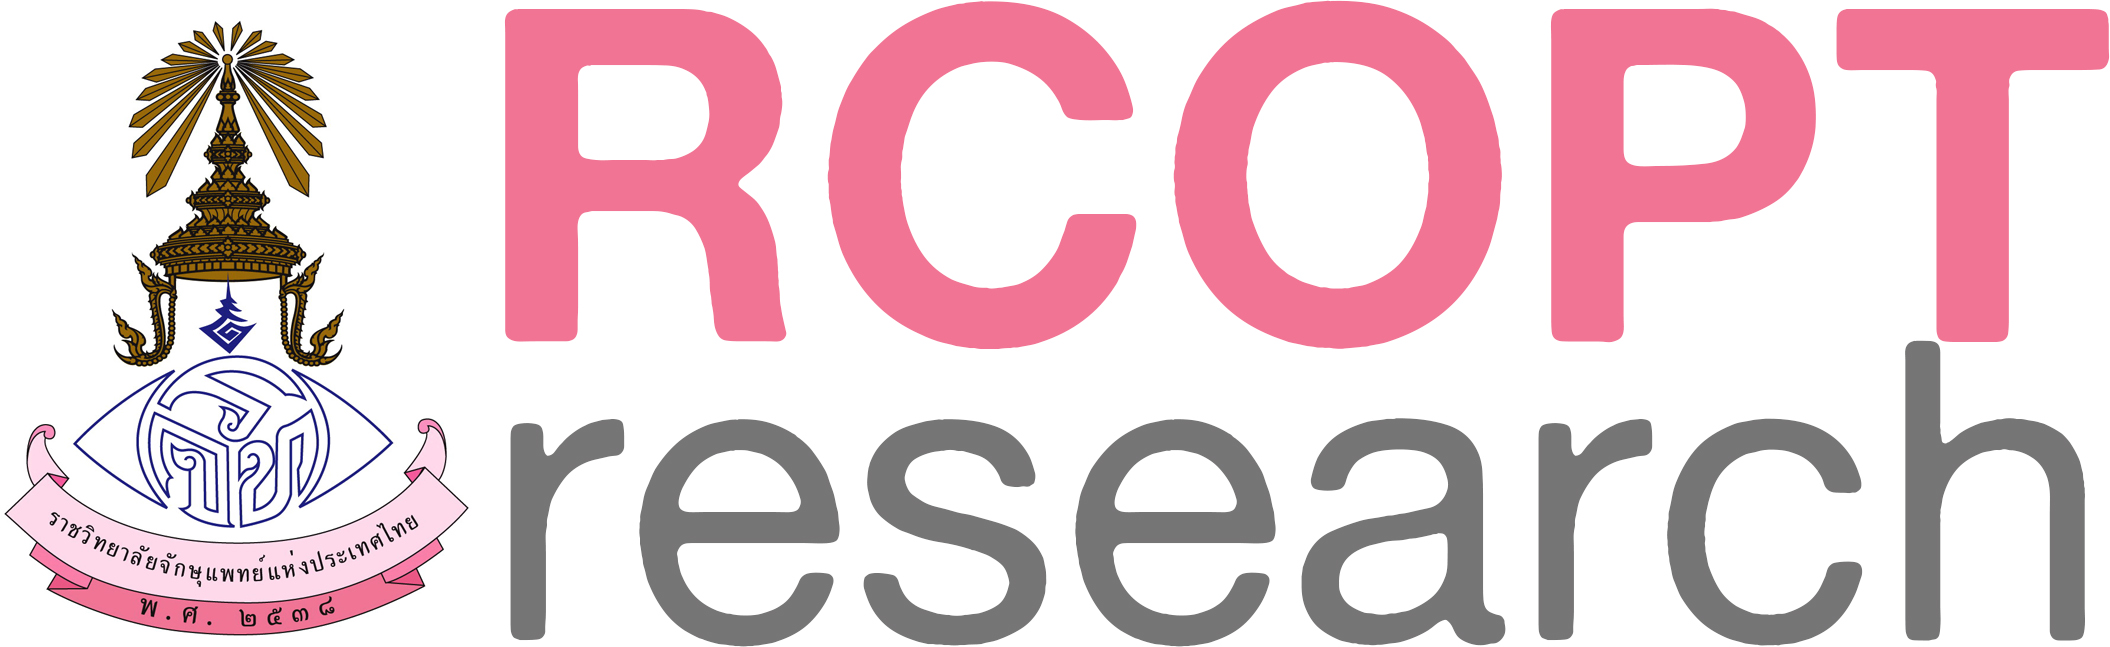 1967RCOPT research logo1.jpg